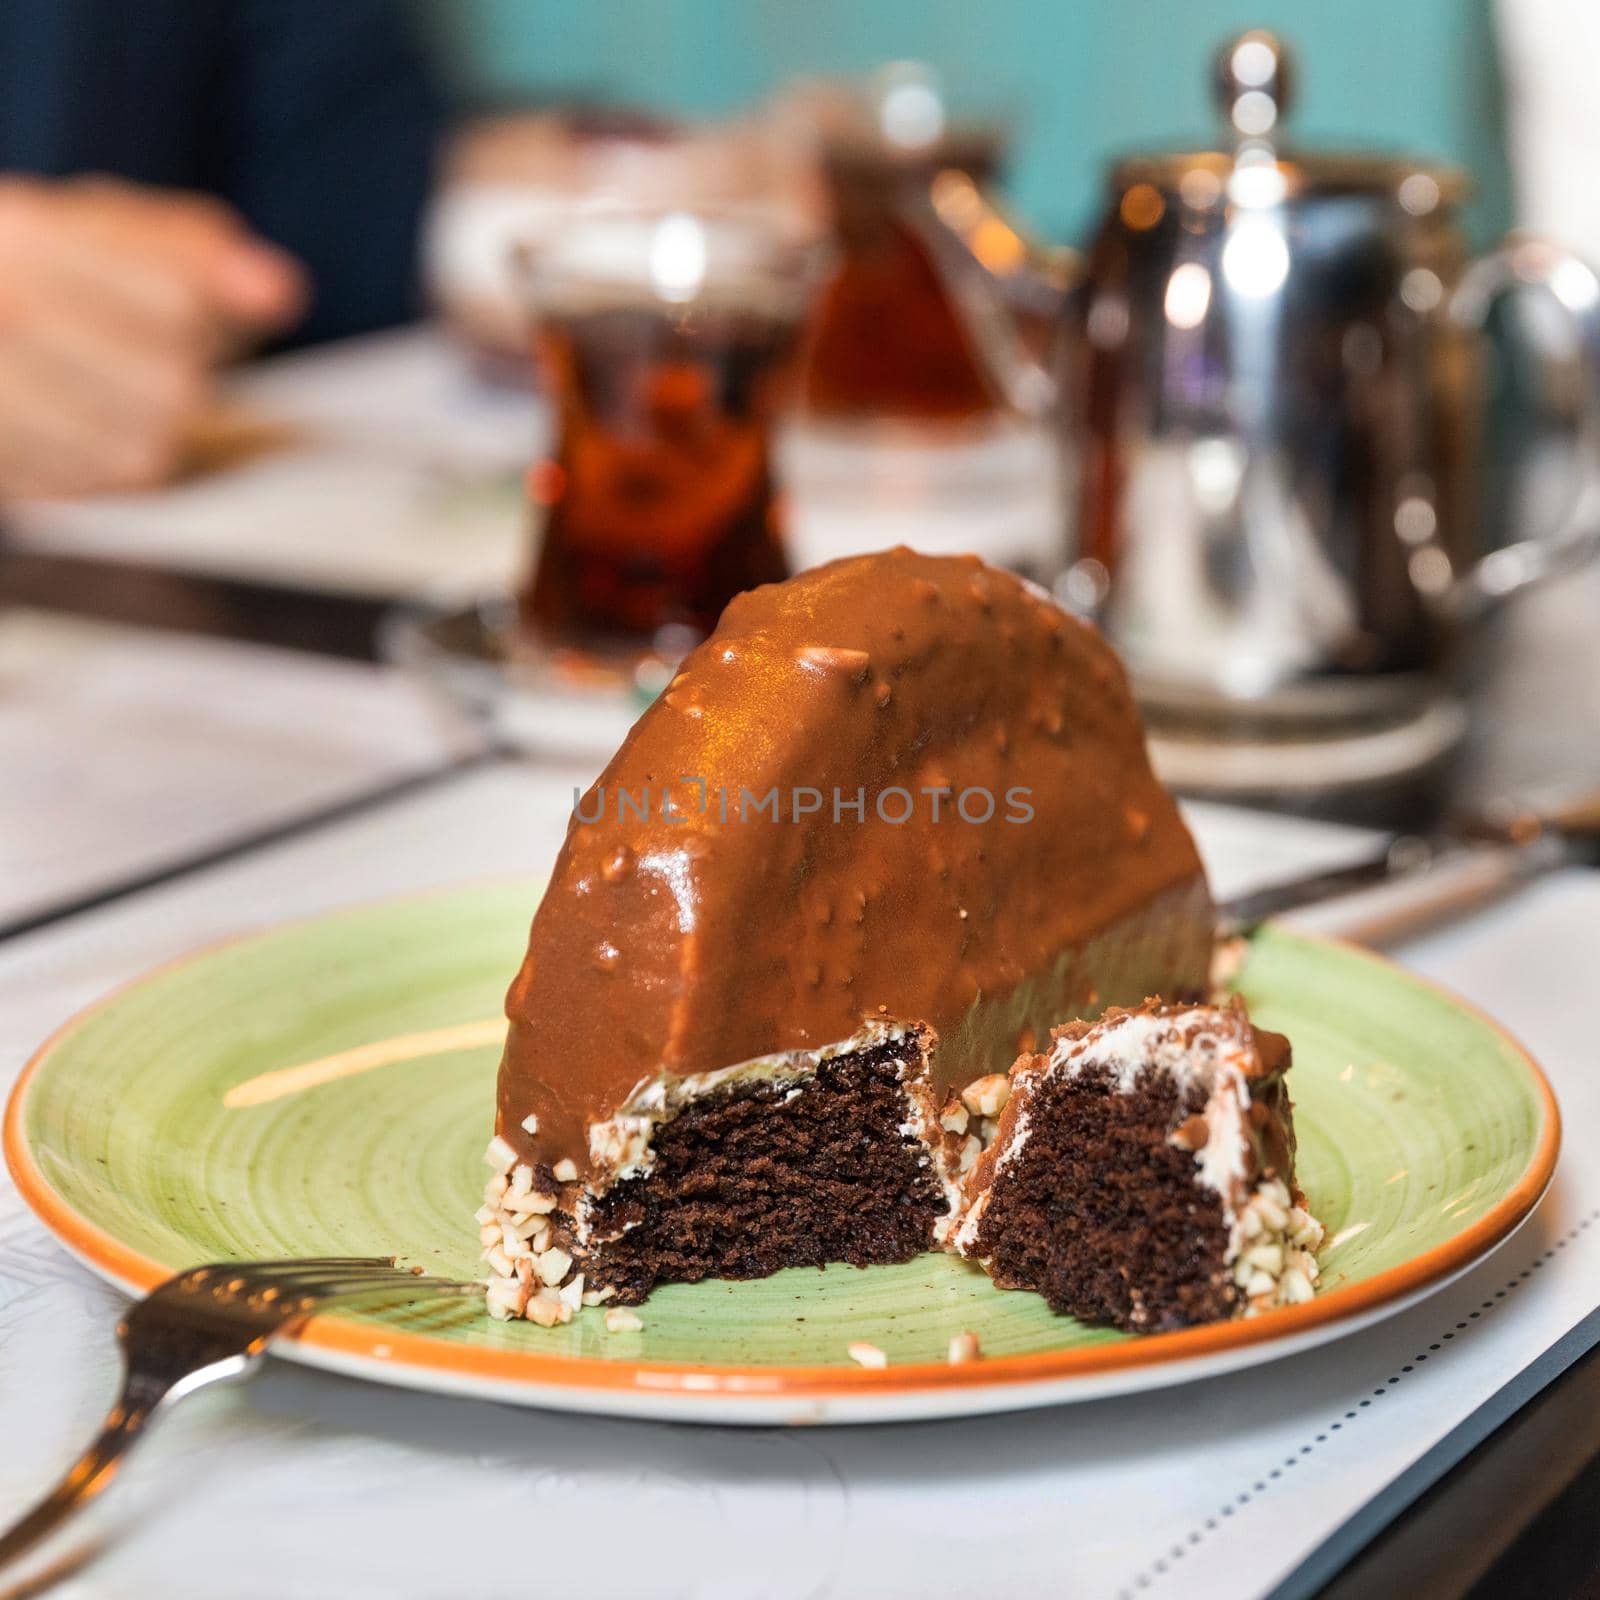 Chocolate dessert on plate close up